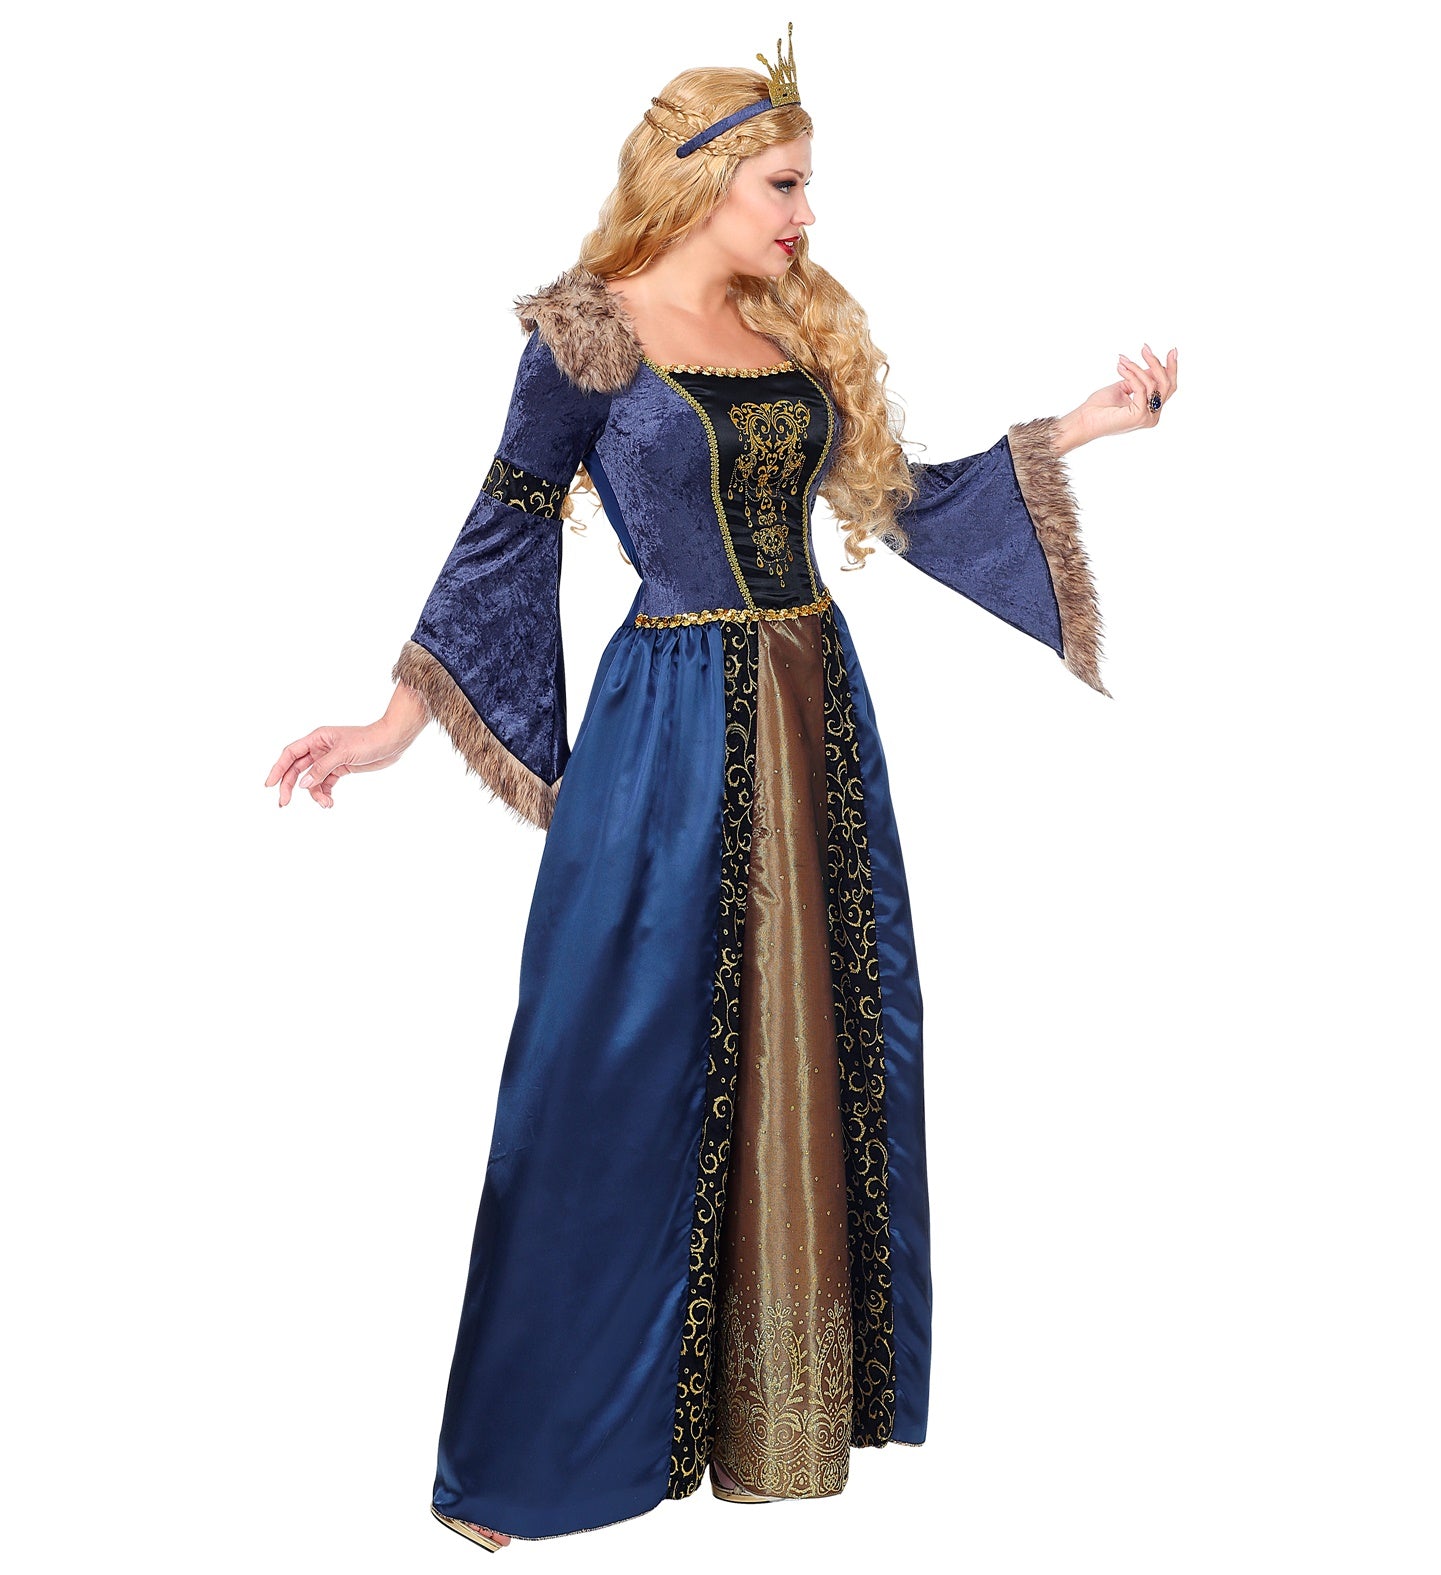 Medieval Queen dress